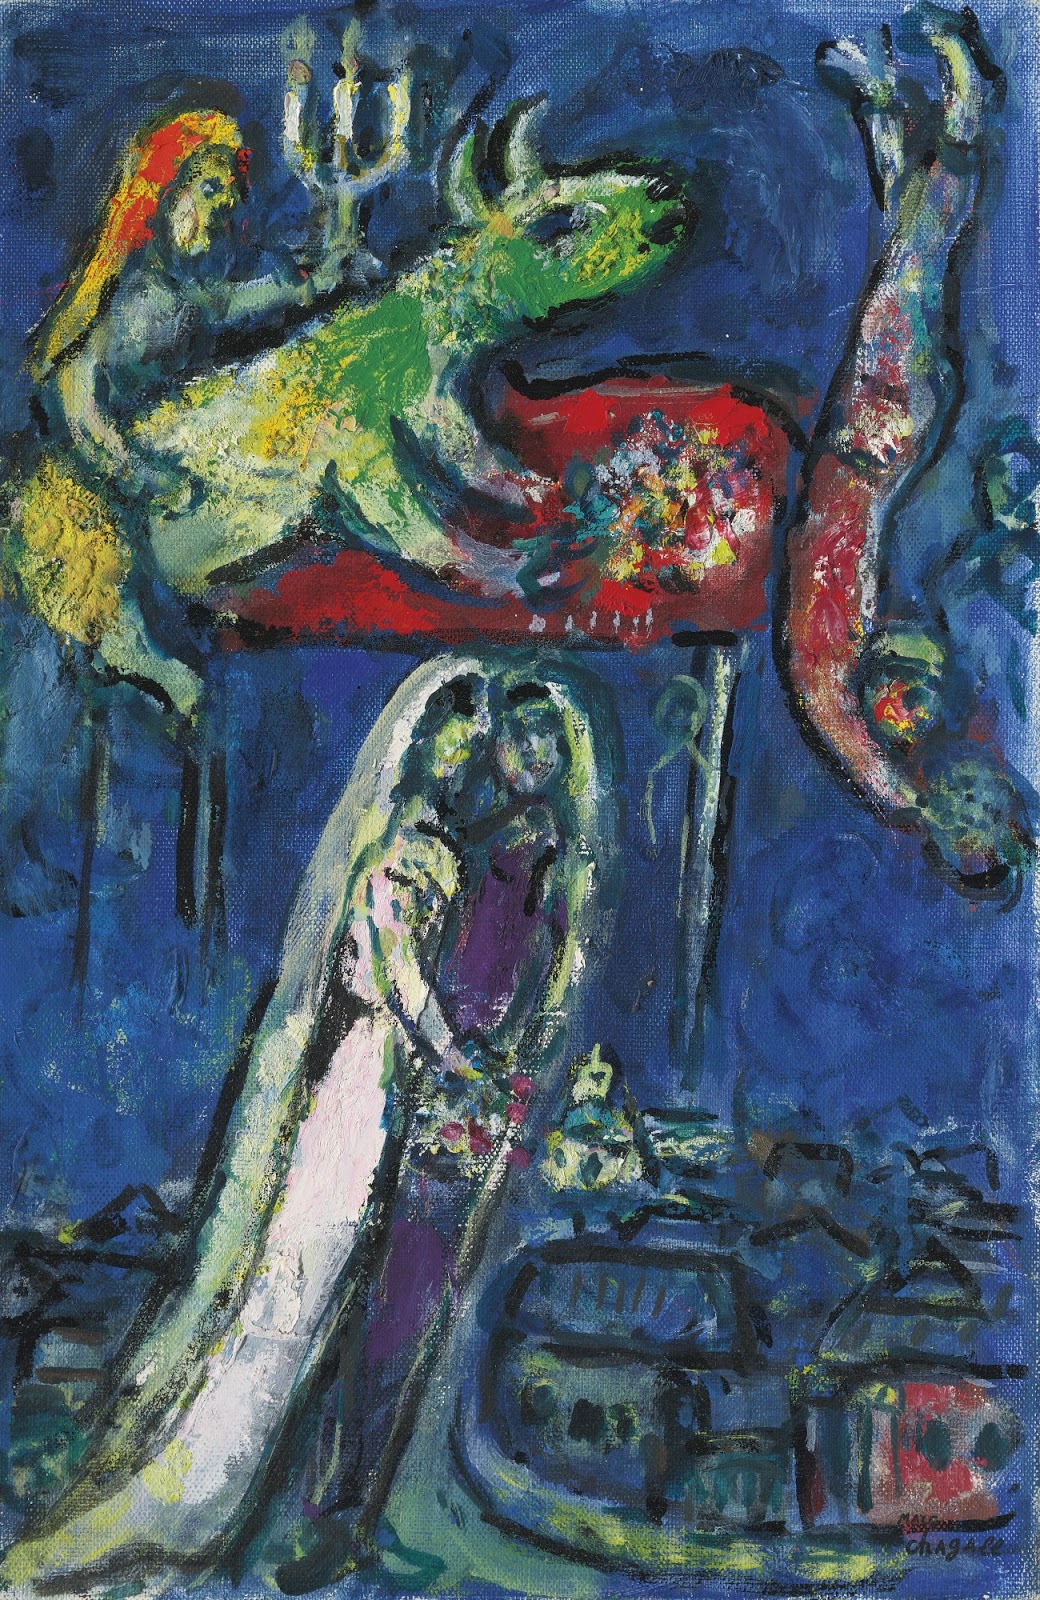 Marc+Chagall-1887-1985 (361).jpg